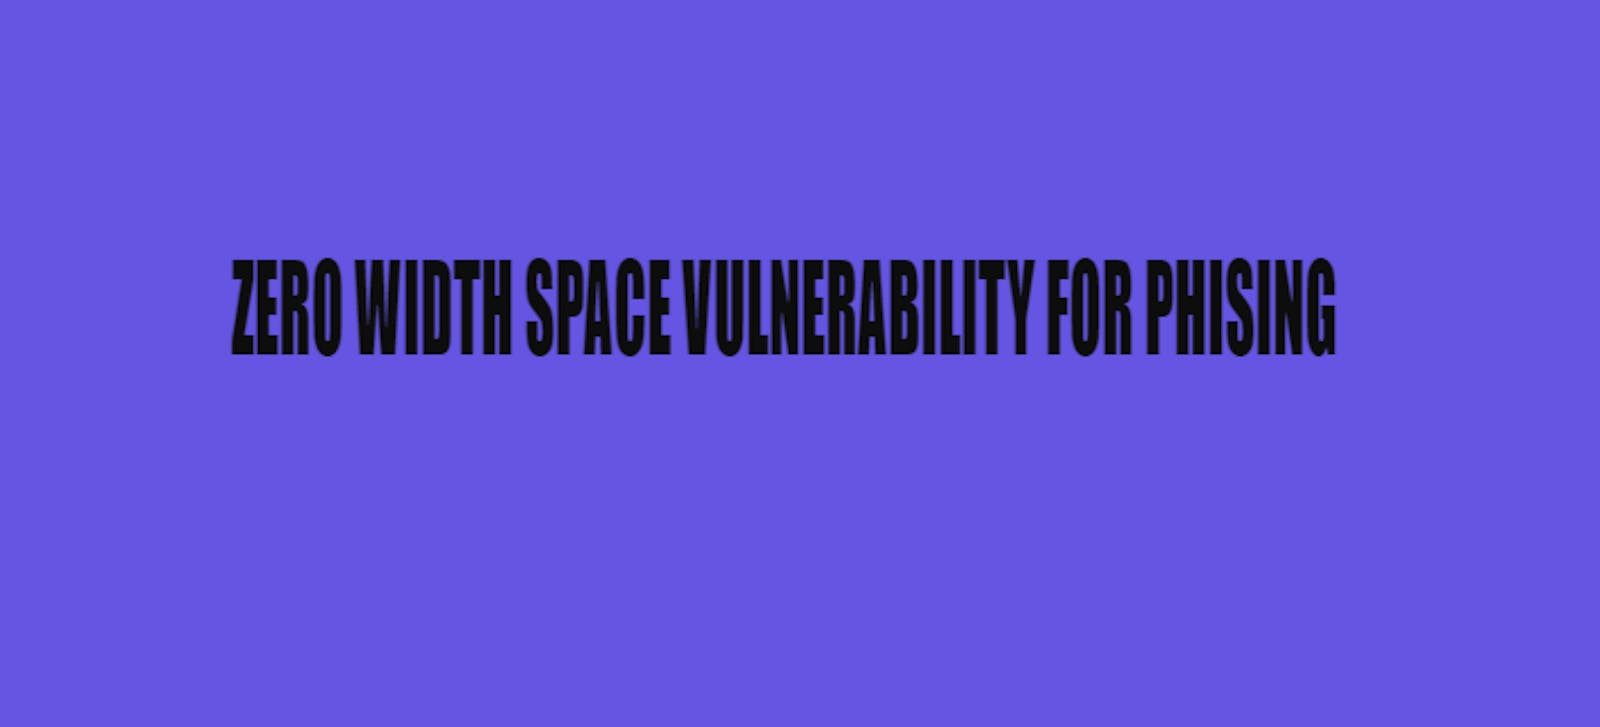 Zero-Width Space (ZWSP) Vulnerability for phishing